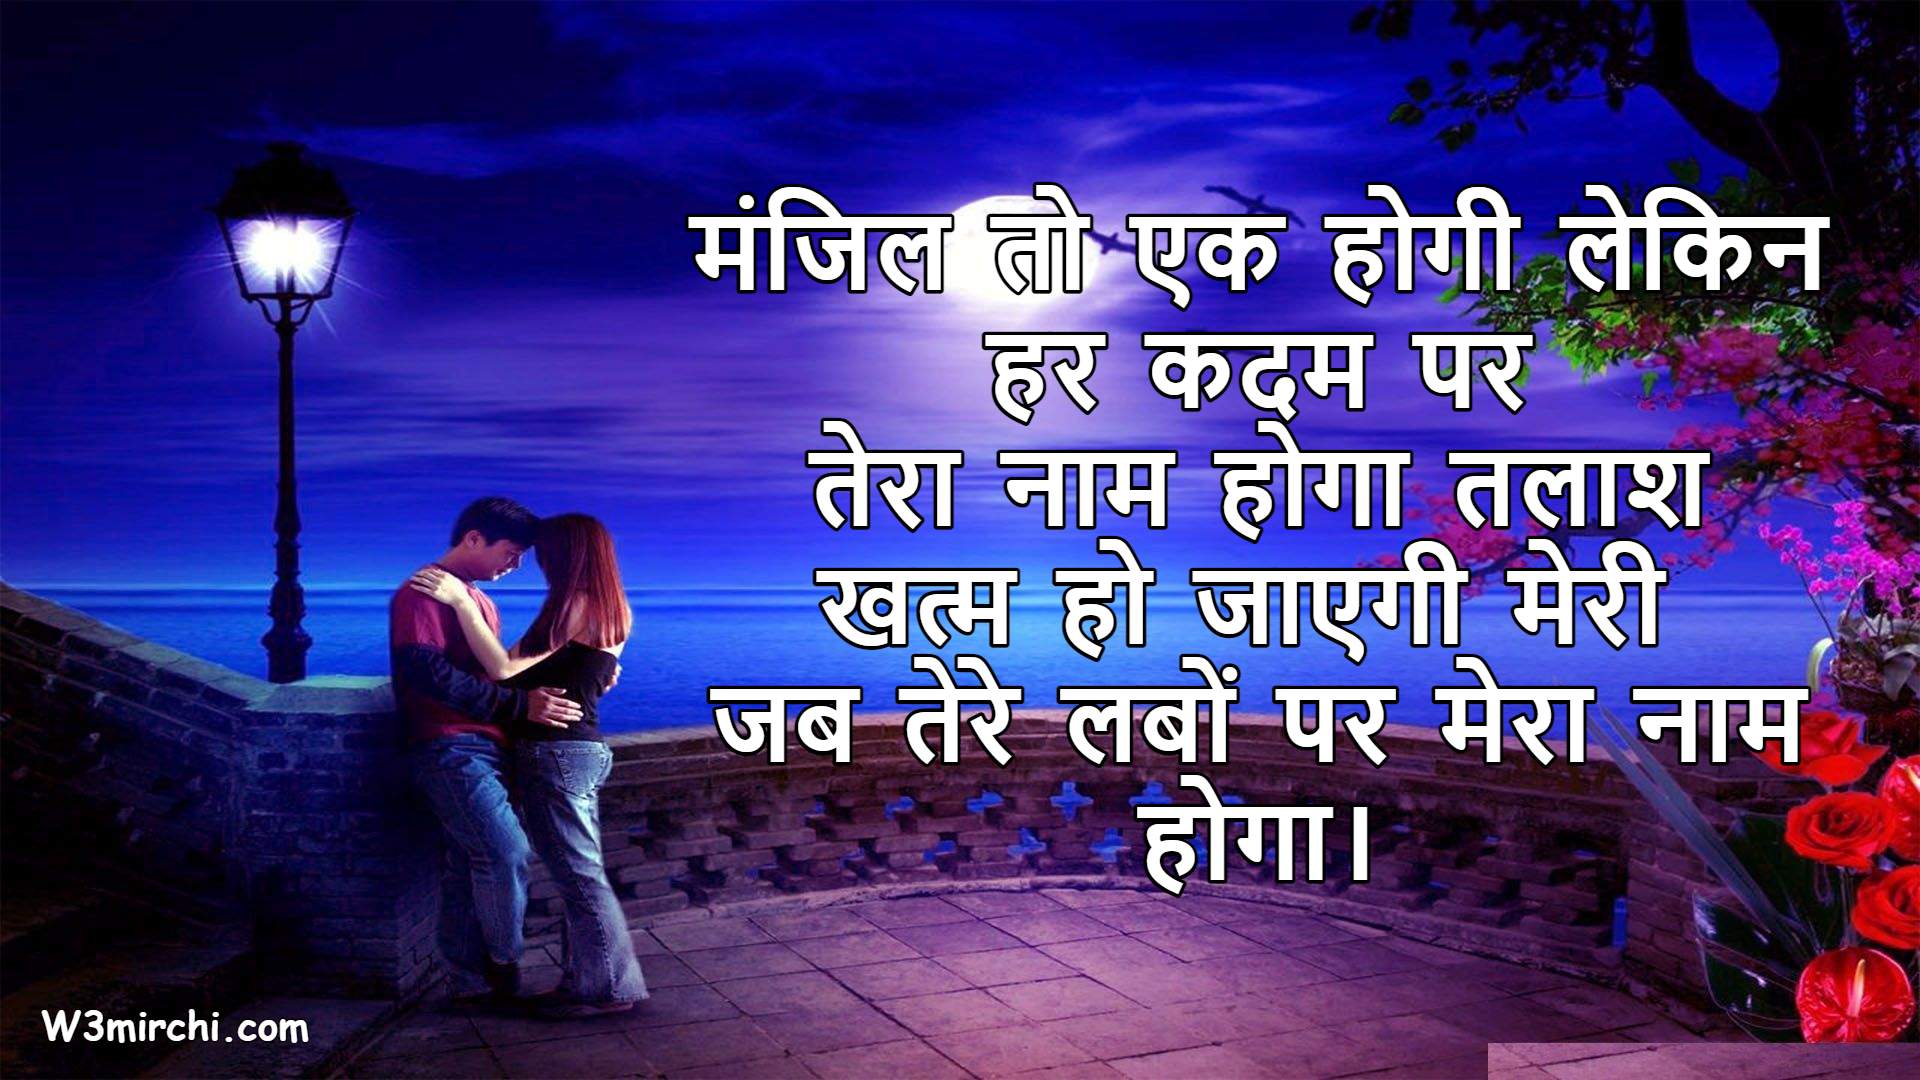 Best Romantic Shayari In Hindi